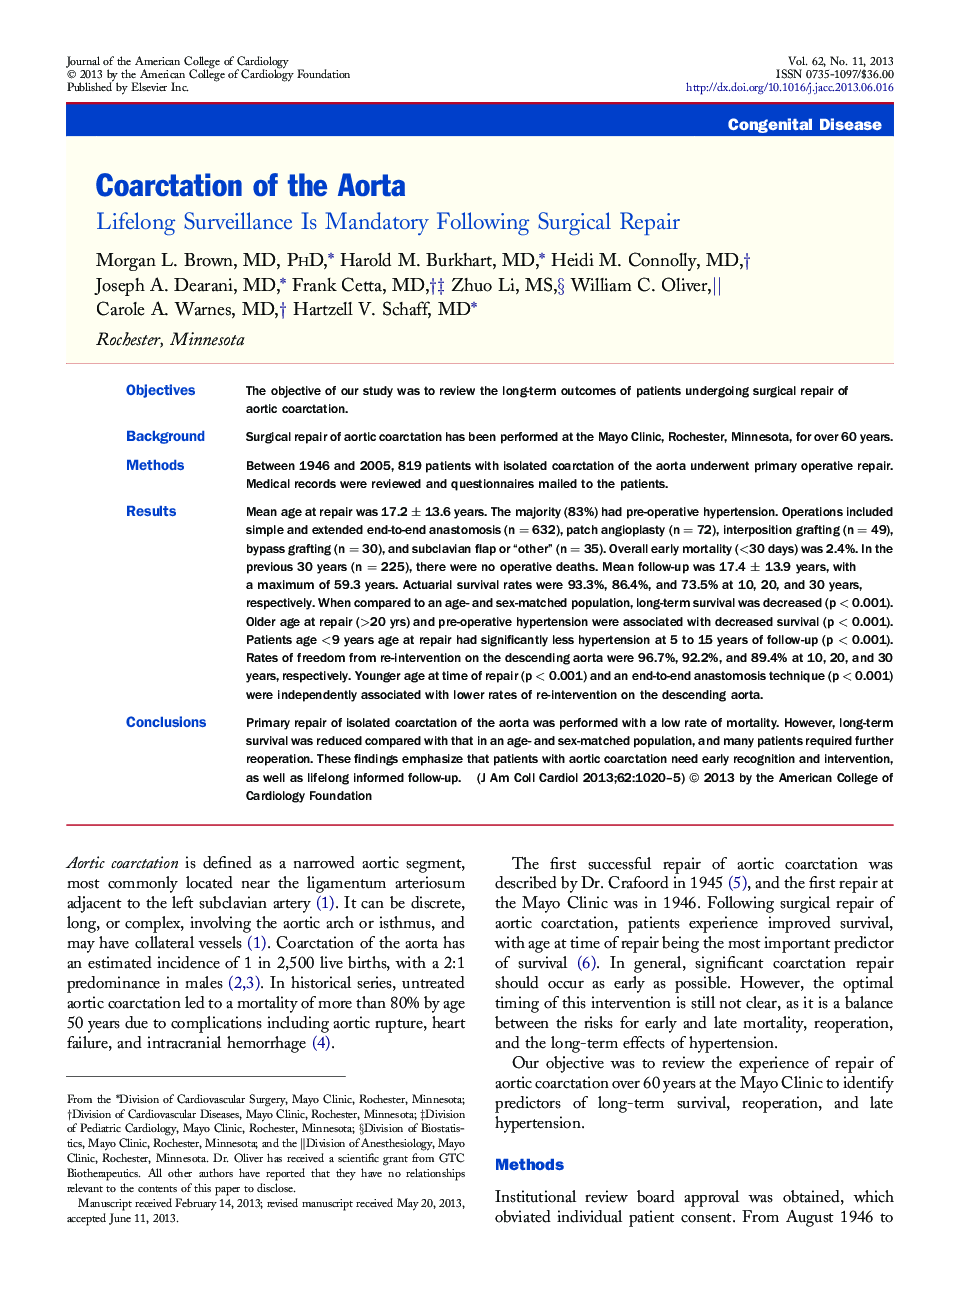 Coarctation of the Aorta : Lifelong Surveillance Is Mandatory Following Surgical Repair